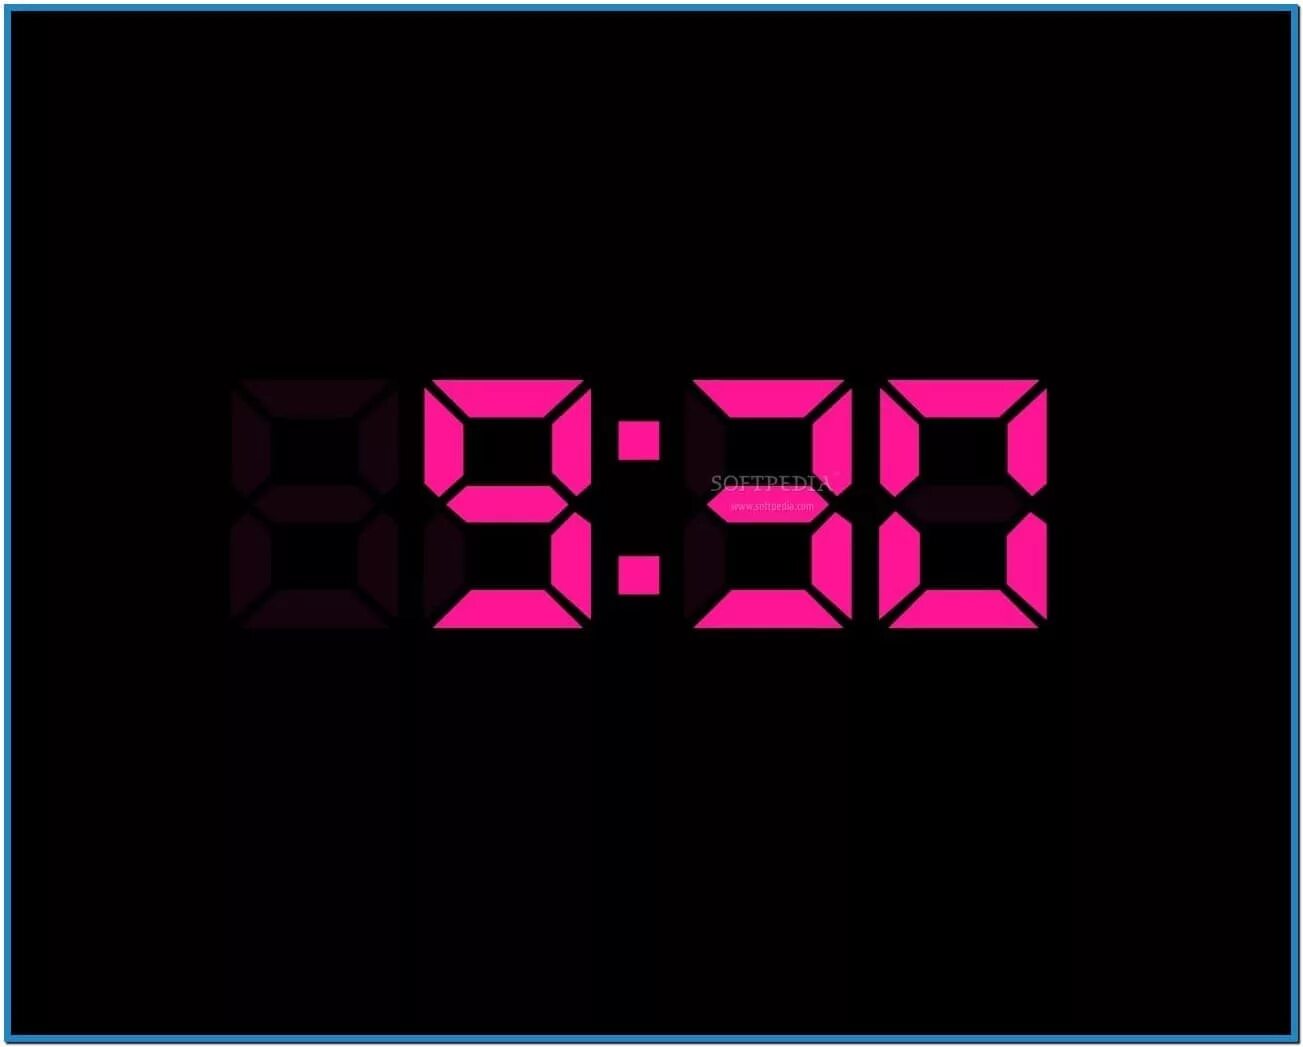 9 30 вечера. Часы Digital Clock 200730138828.4. Цифровые часы на экран. Скринсейвер электронные часы. Скринсейвер цифровые часы.